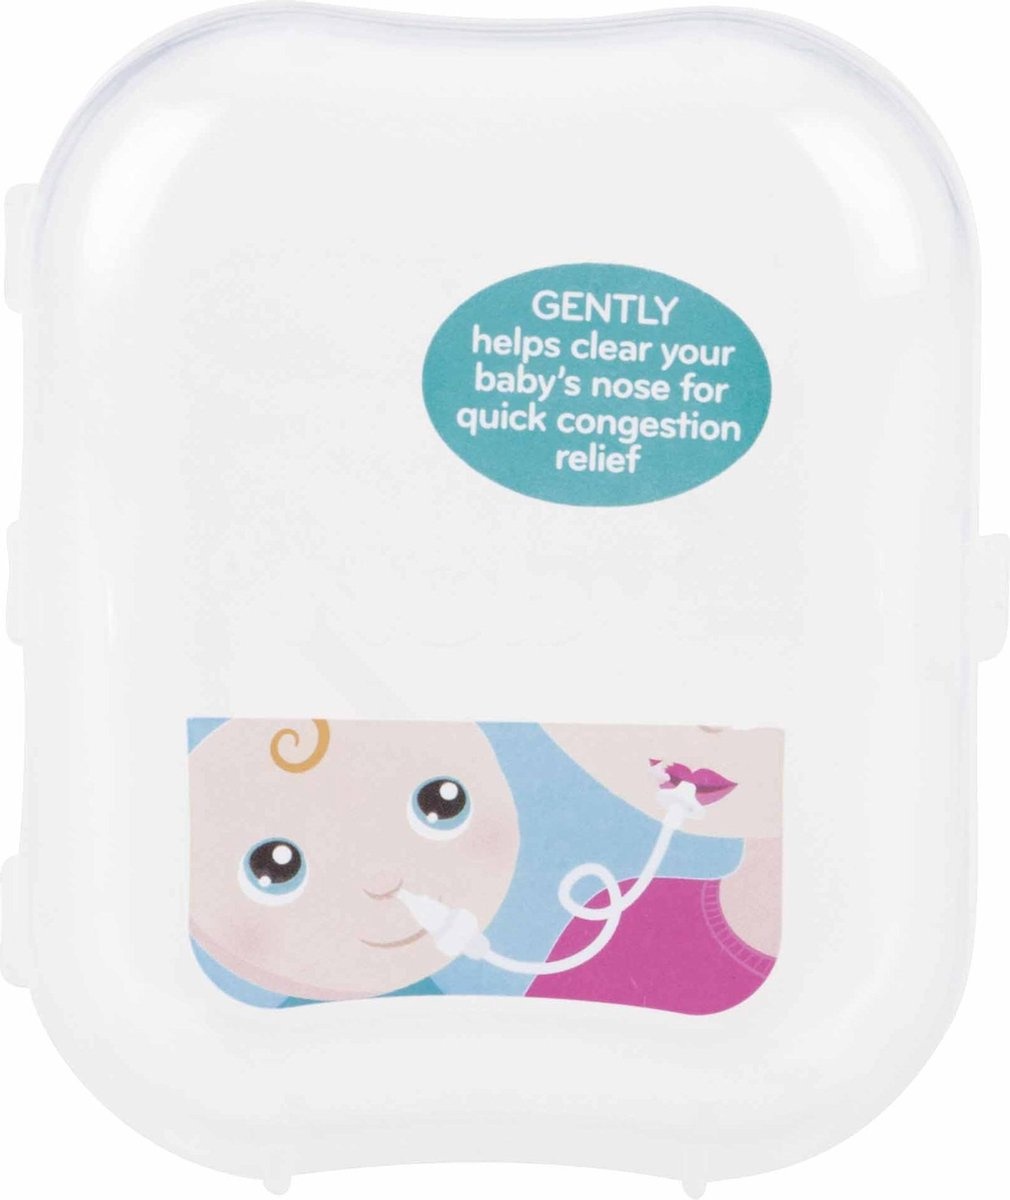 Nasal aspirator for baby - Nûby - Packaging damaged